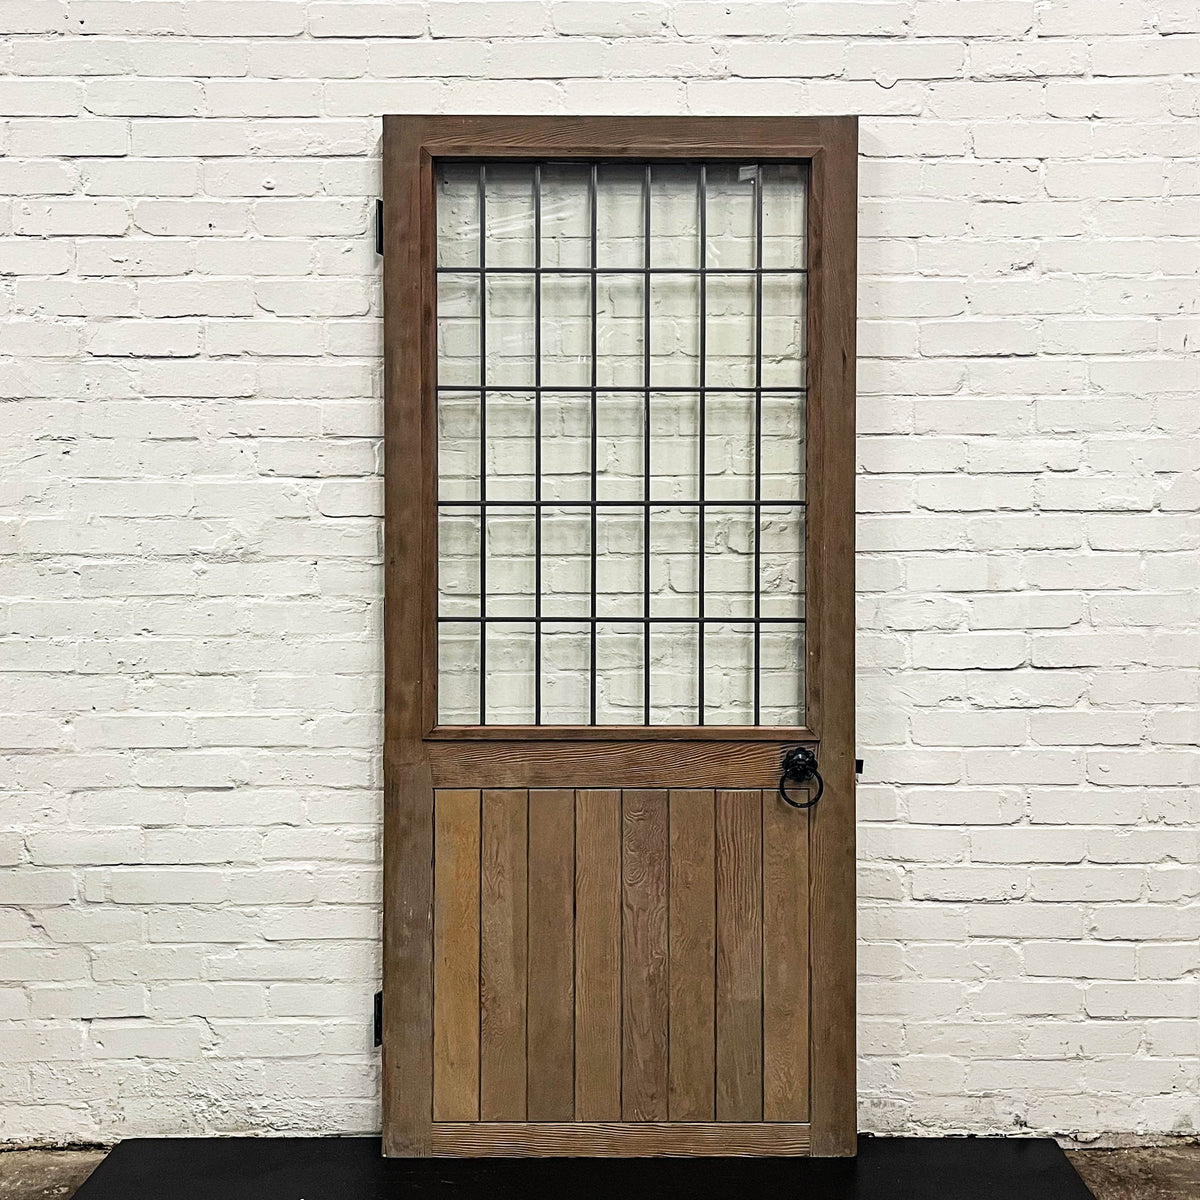 Antique Victorian Glazed Latch Door - 195cm x 88.5cm | The Architectural Forum